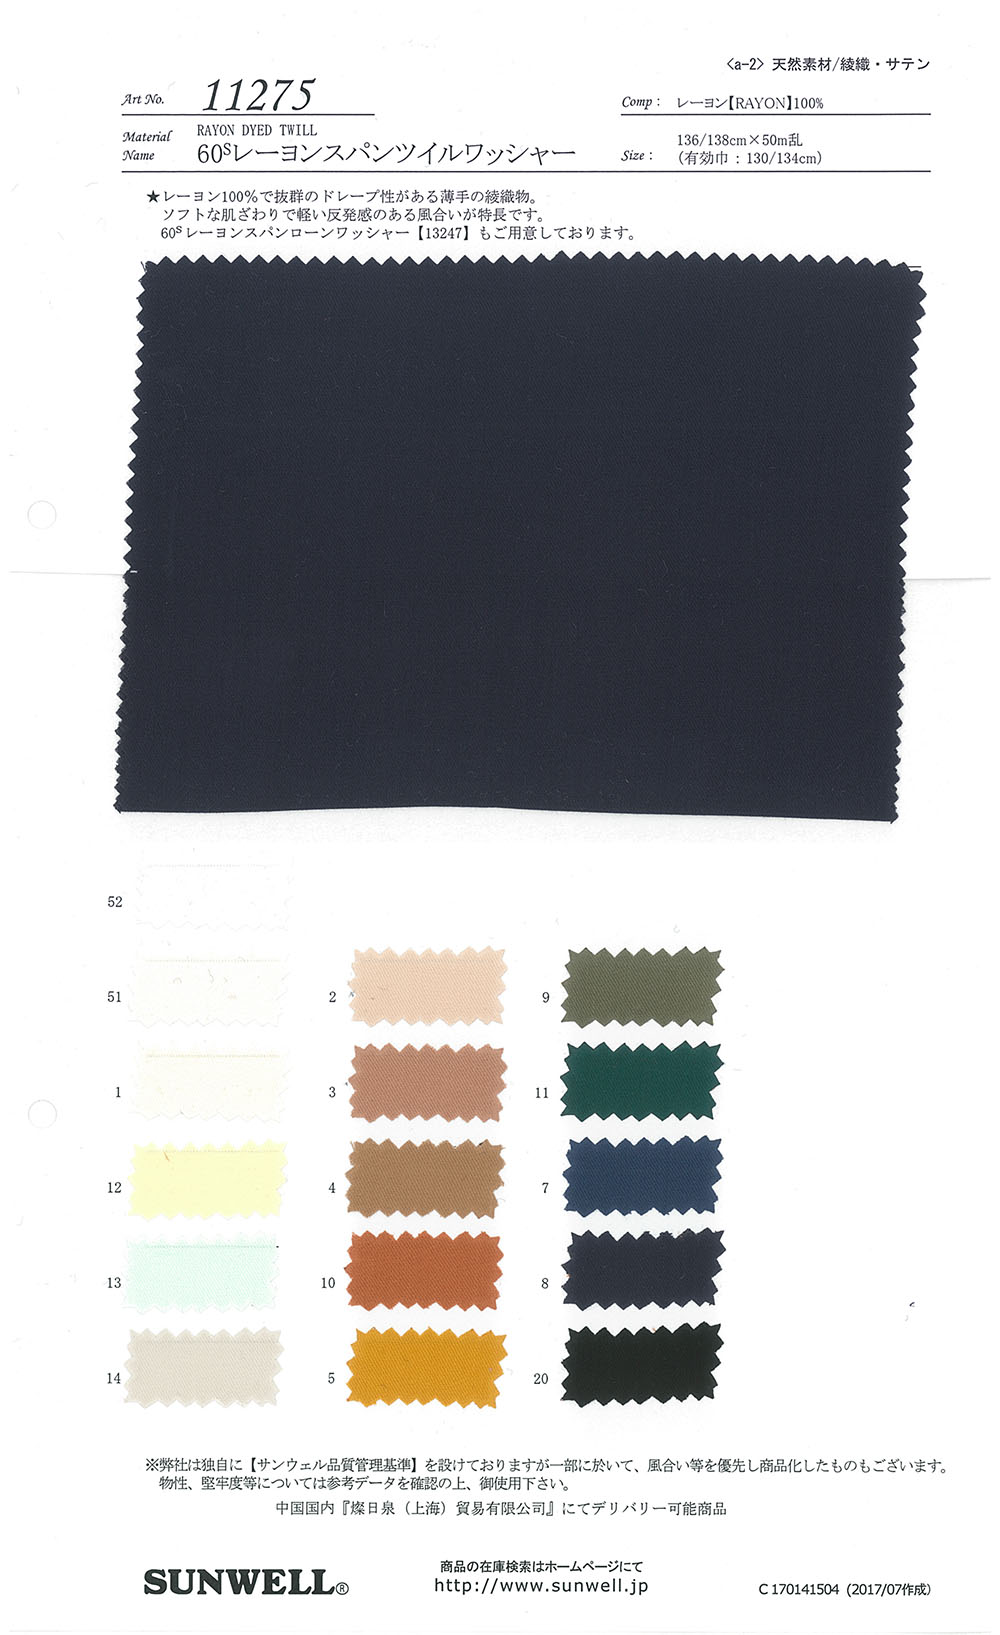 1034 Seat Belt Bag Weave[Ribbon Tape Cord] QUEEN ACE/Okura Shoji Co., Ltd.  - ApparelX